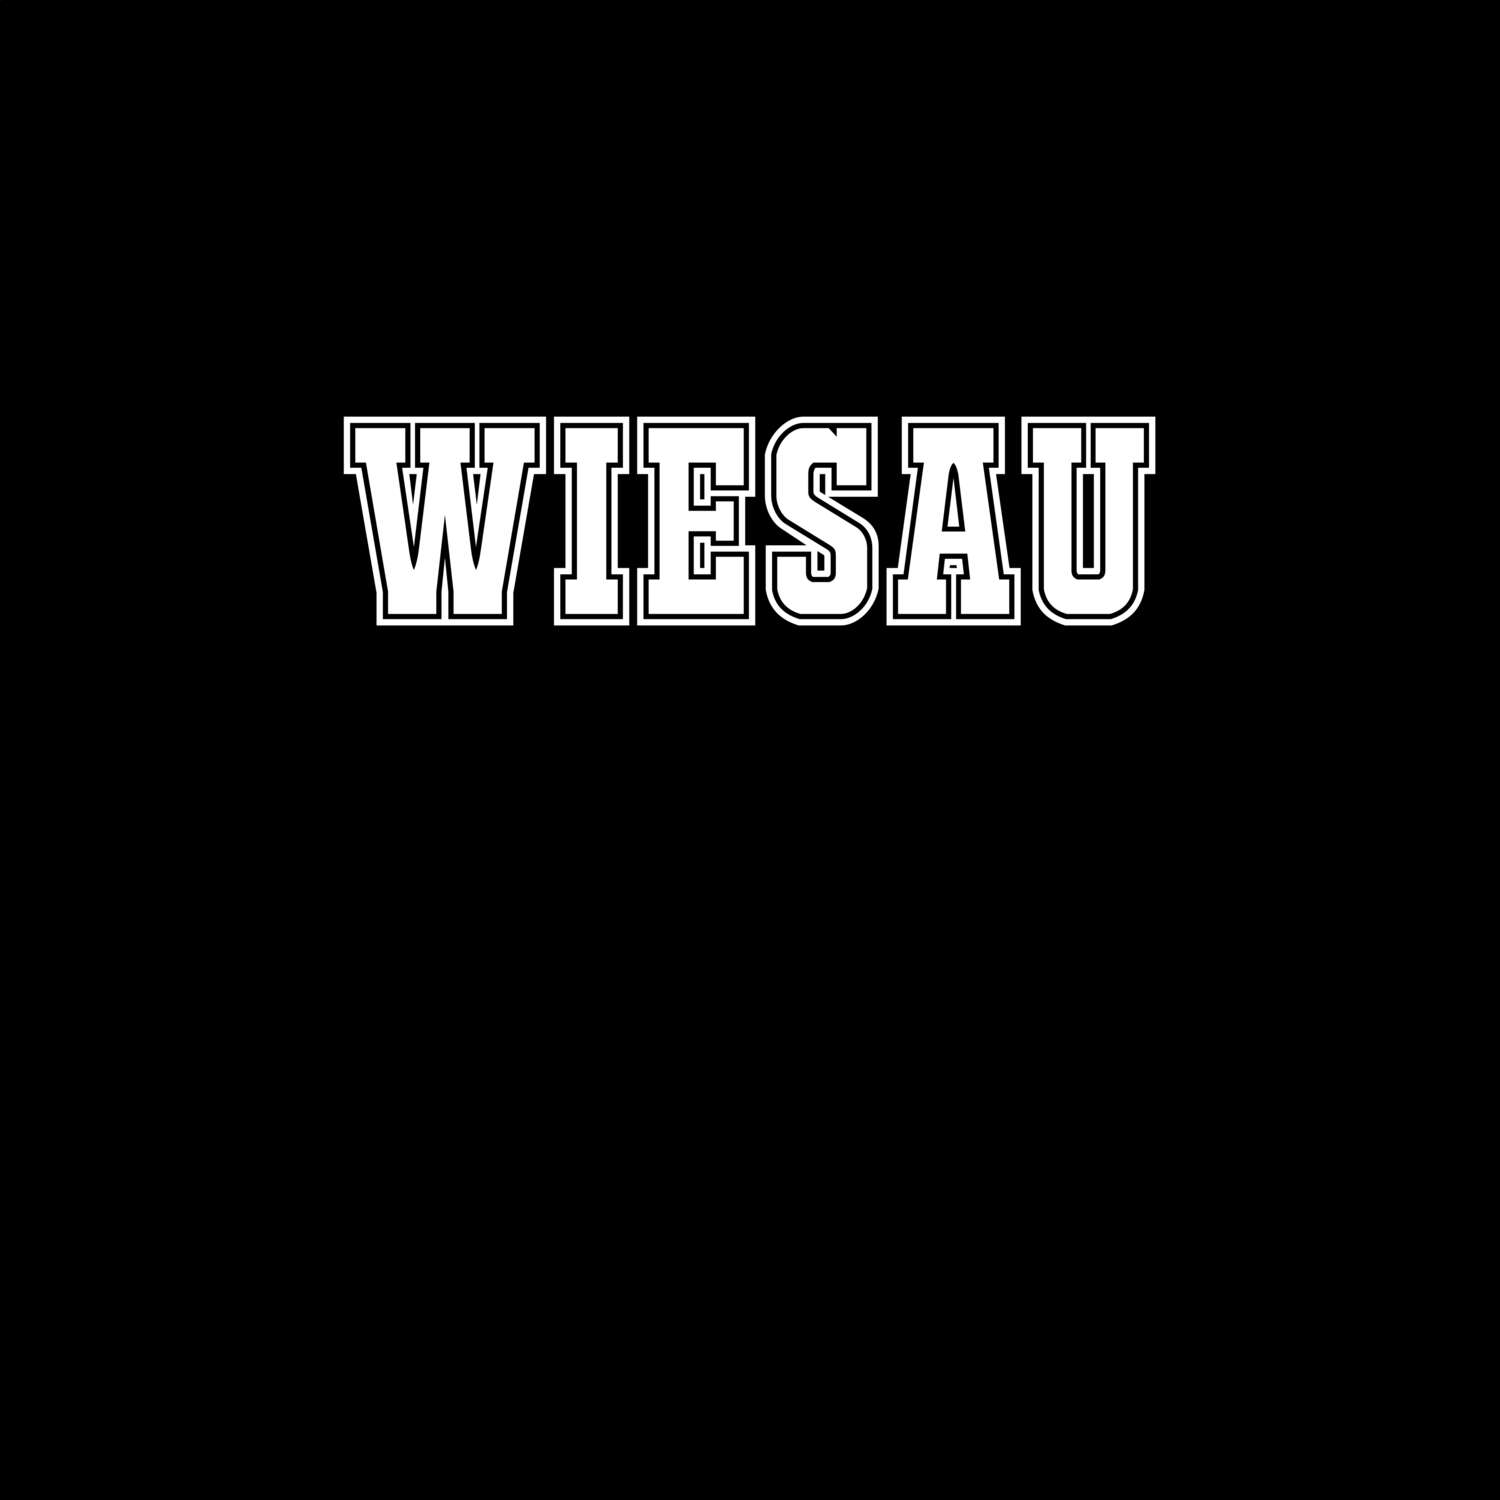 Wiesau T-Shirt »Classic«